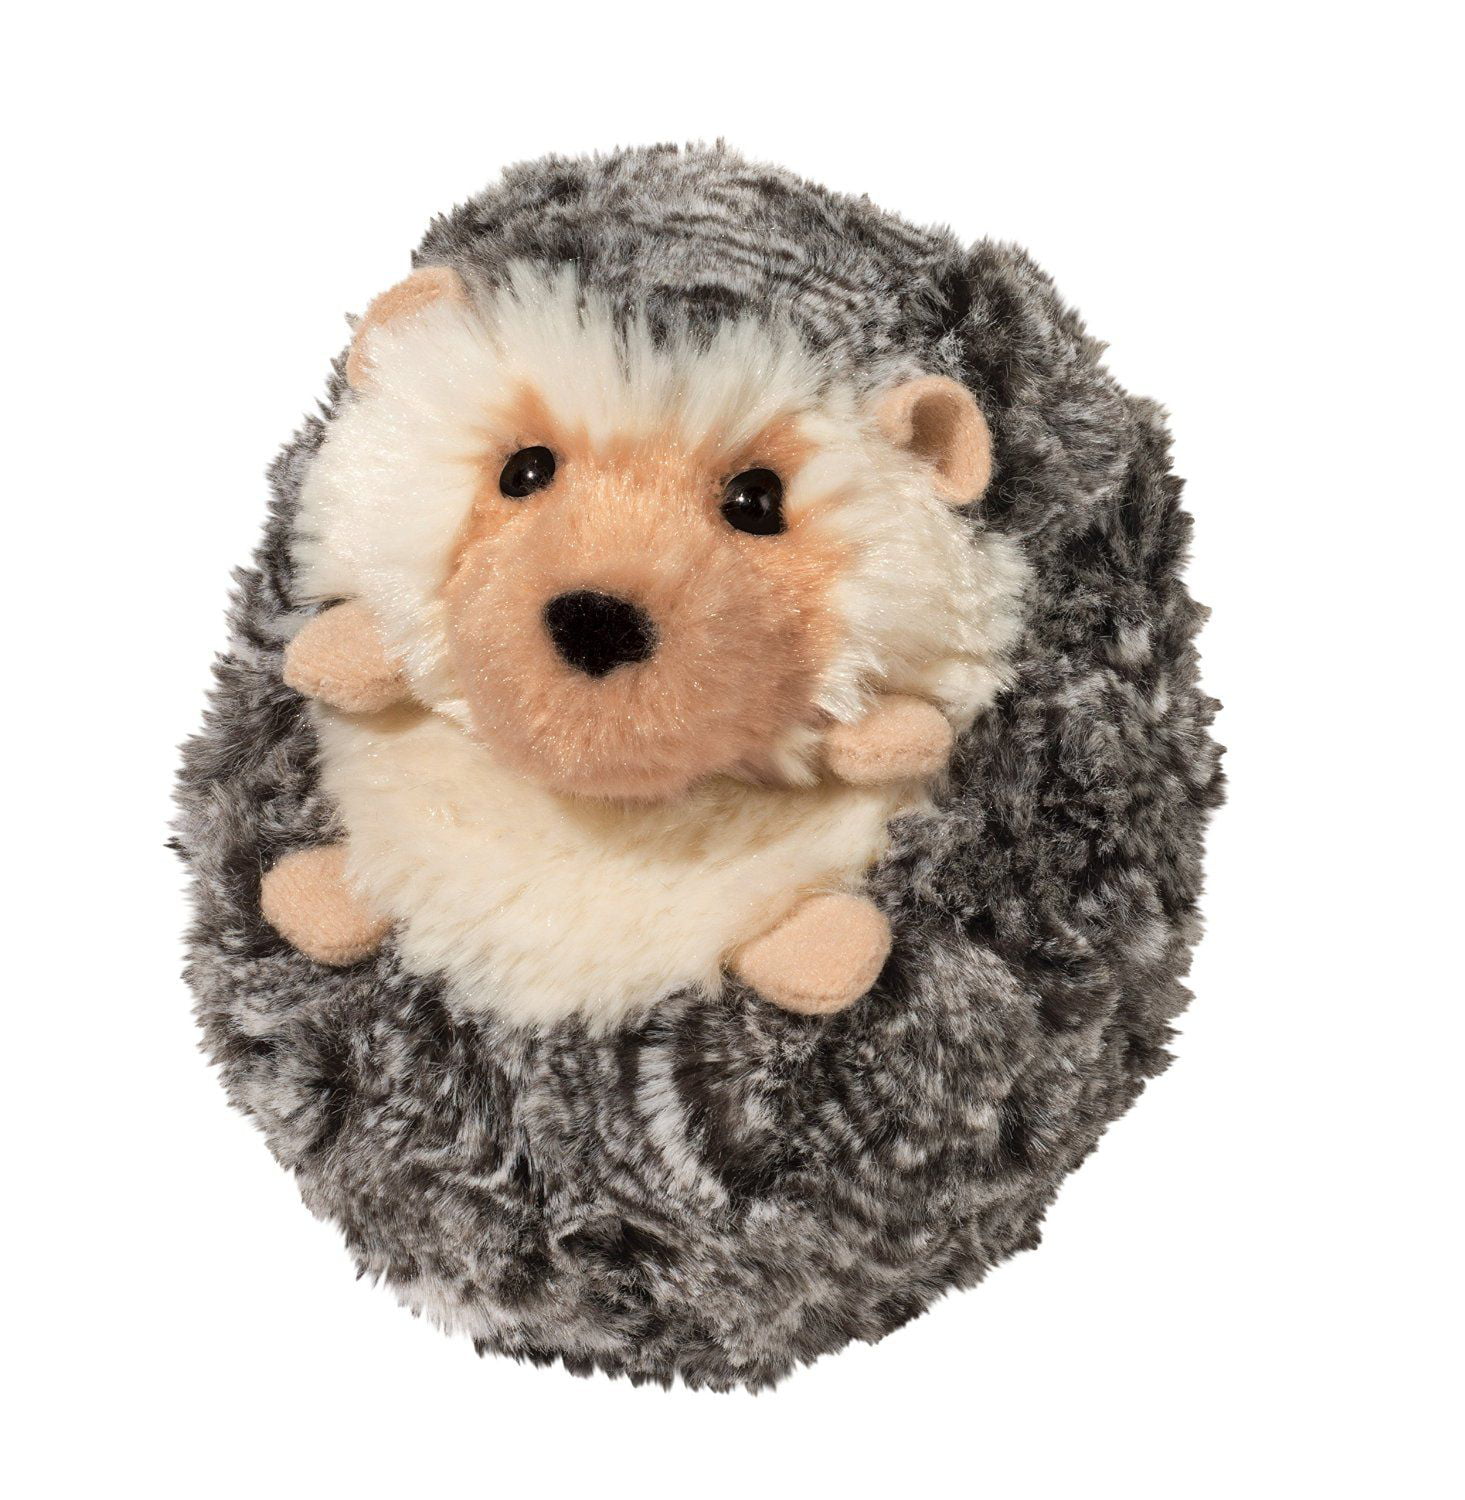 Douglas Cuddle Toys Spunky the Hedgehog # 1838 Stuffed Animal Toy 